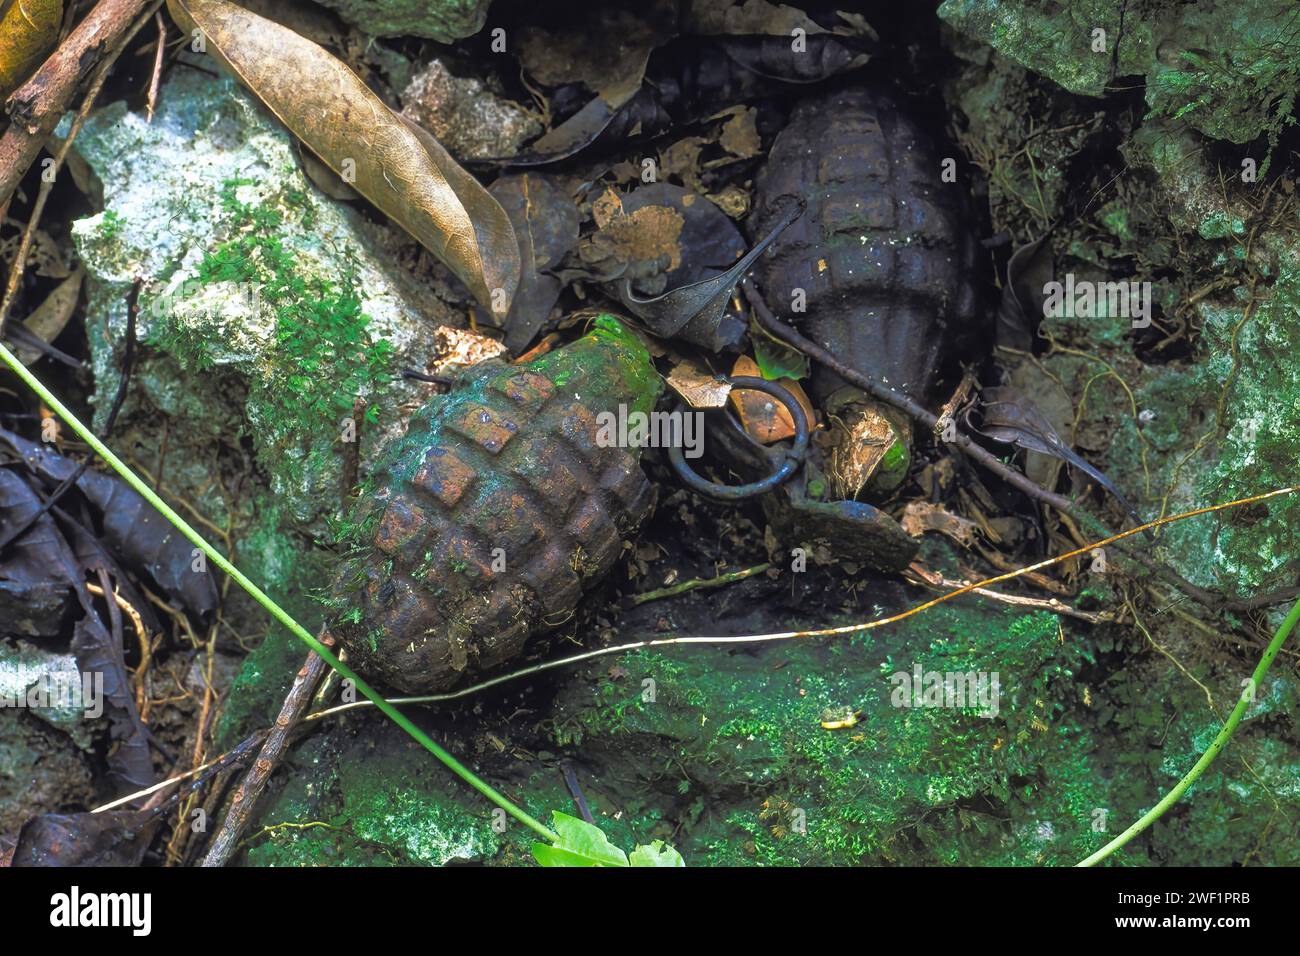 Abandoned WW2 American Mk 2 grenades left in the jungle since the 1944 Battle of Peleliu, Pacific War. Peleliu, Palau Islands, Micronesia Stock Photo